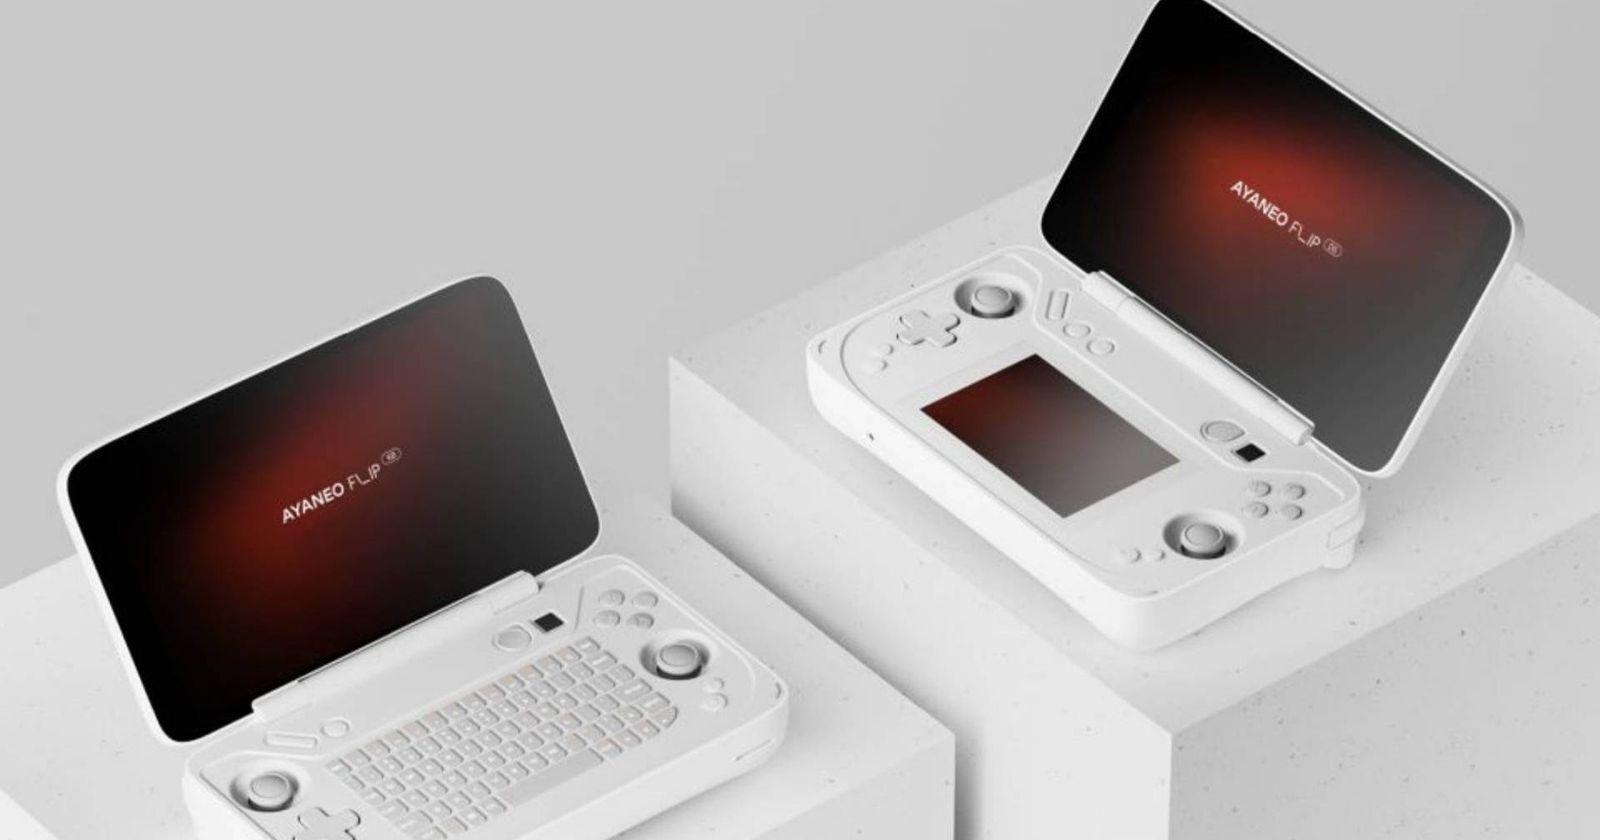 4 akanakisa Nintendo DS emulators e Android - Frontal Gamer